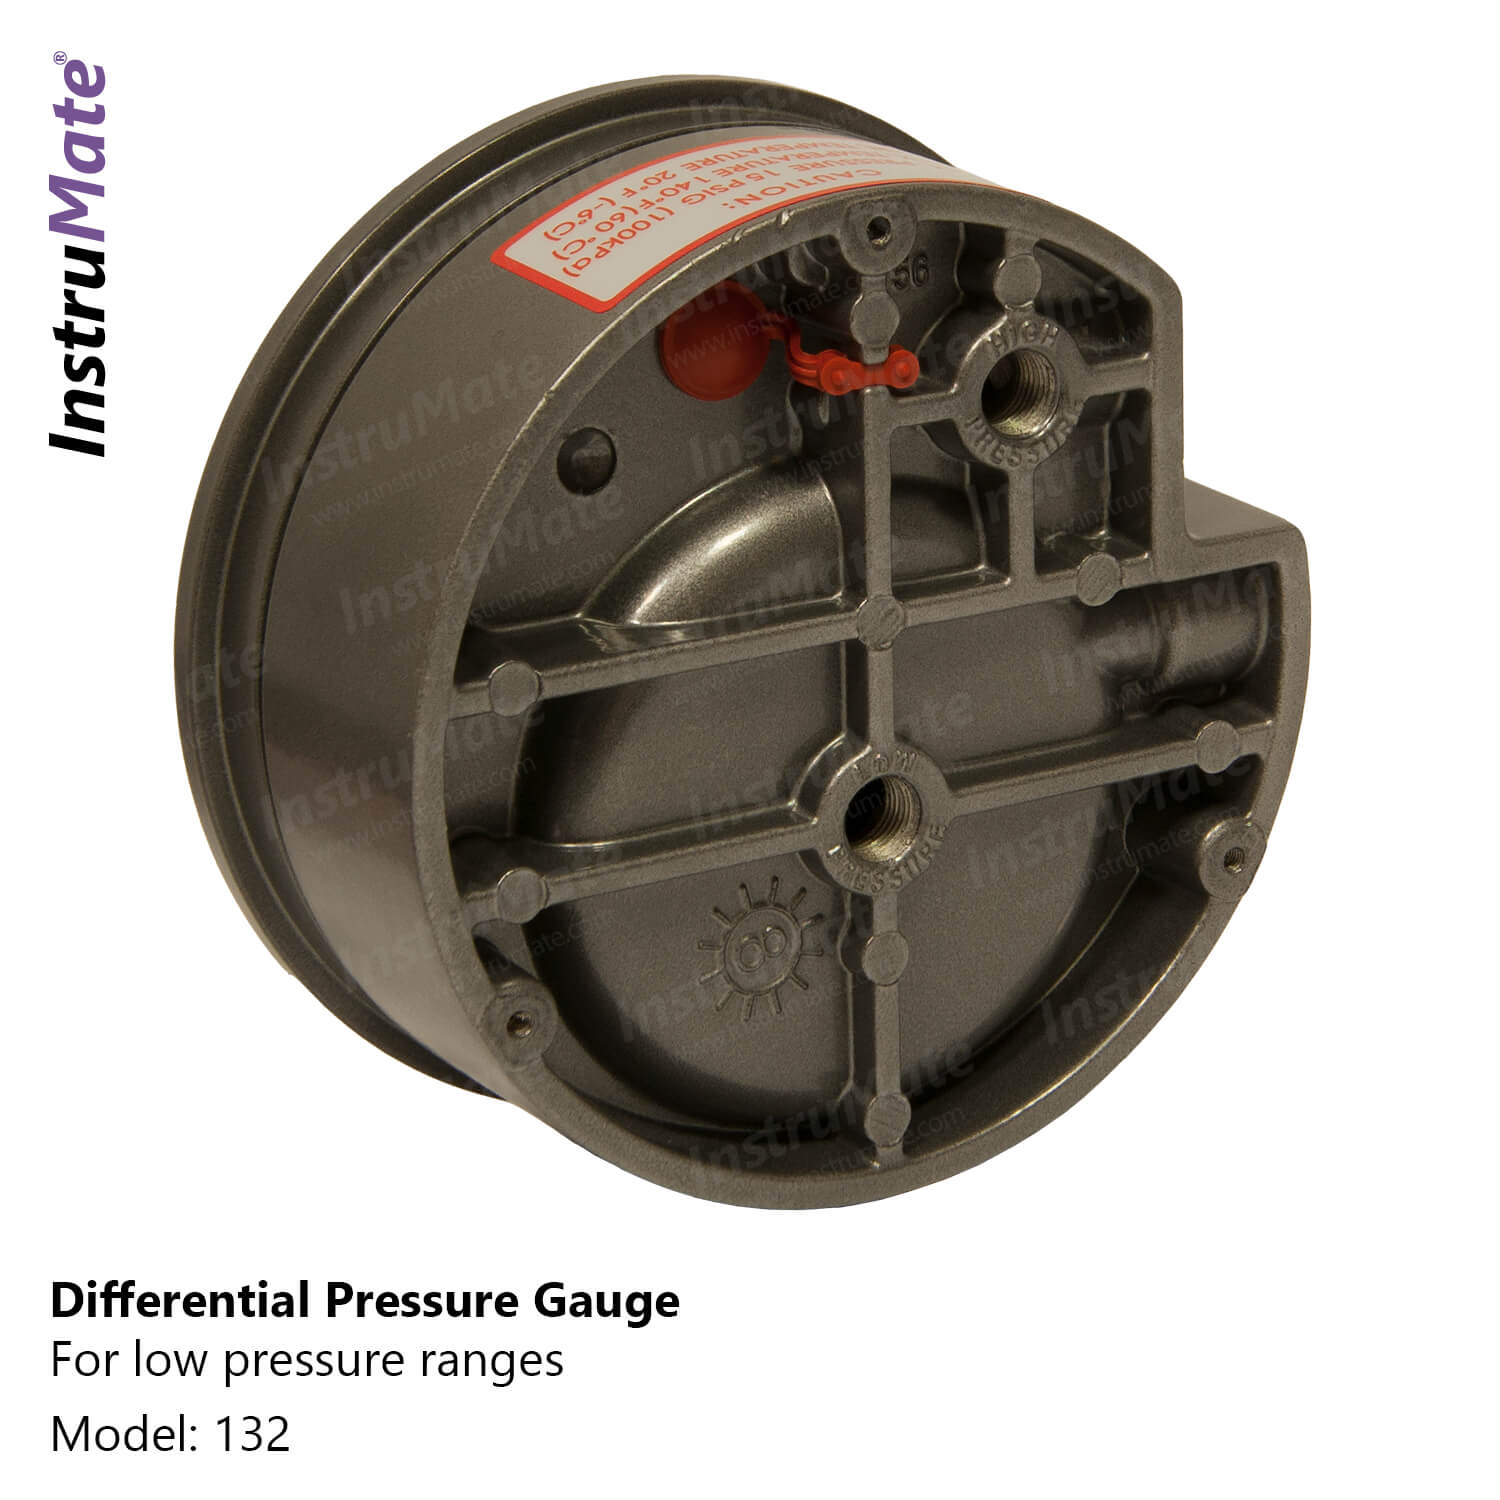 Low pressure differential pressure gauge - 132 - instrumate